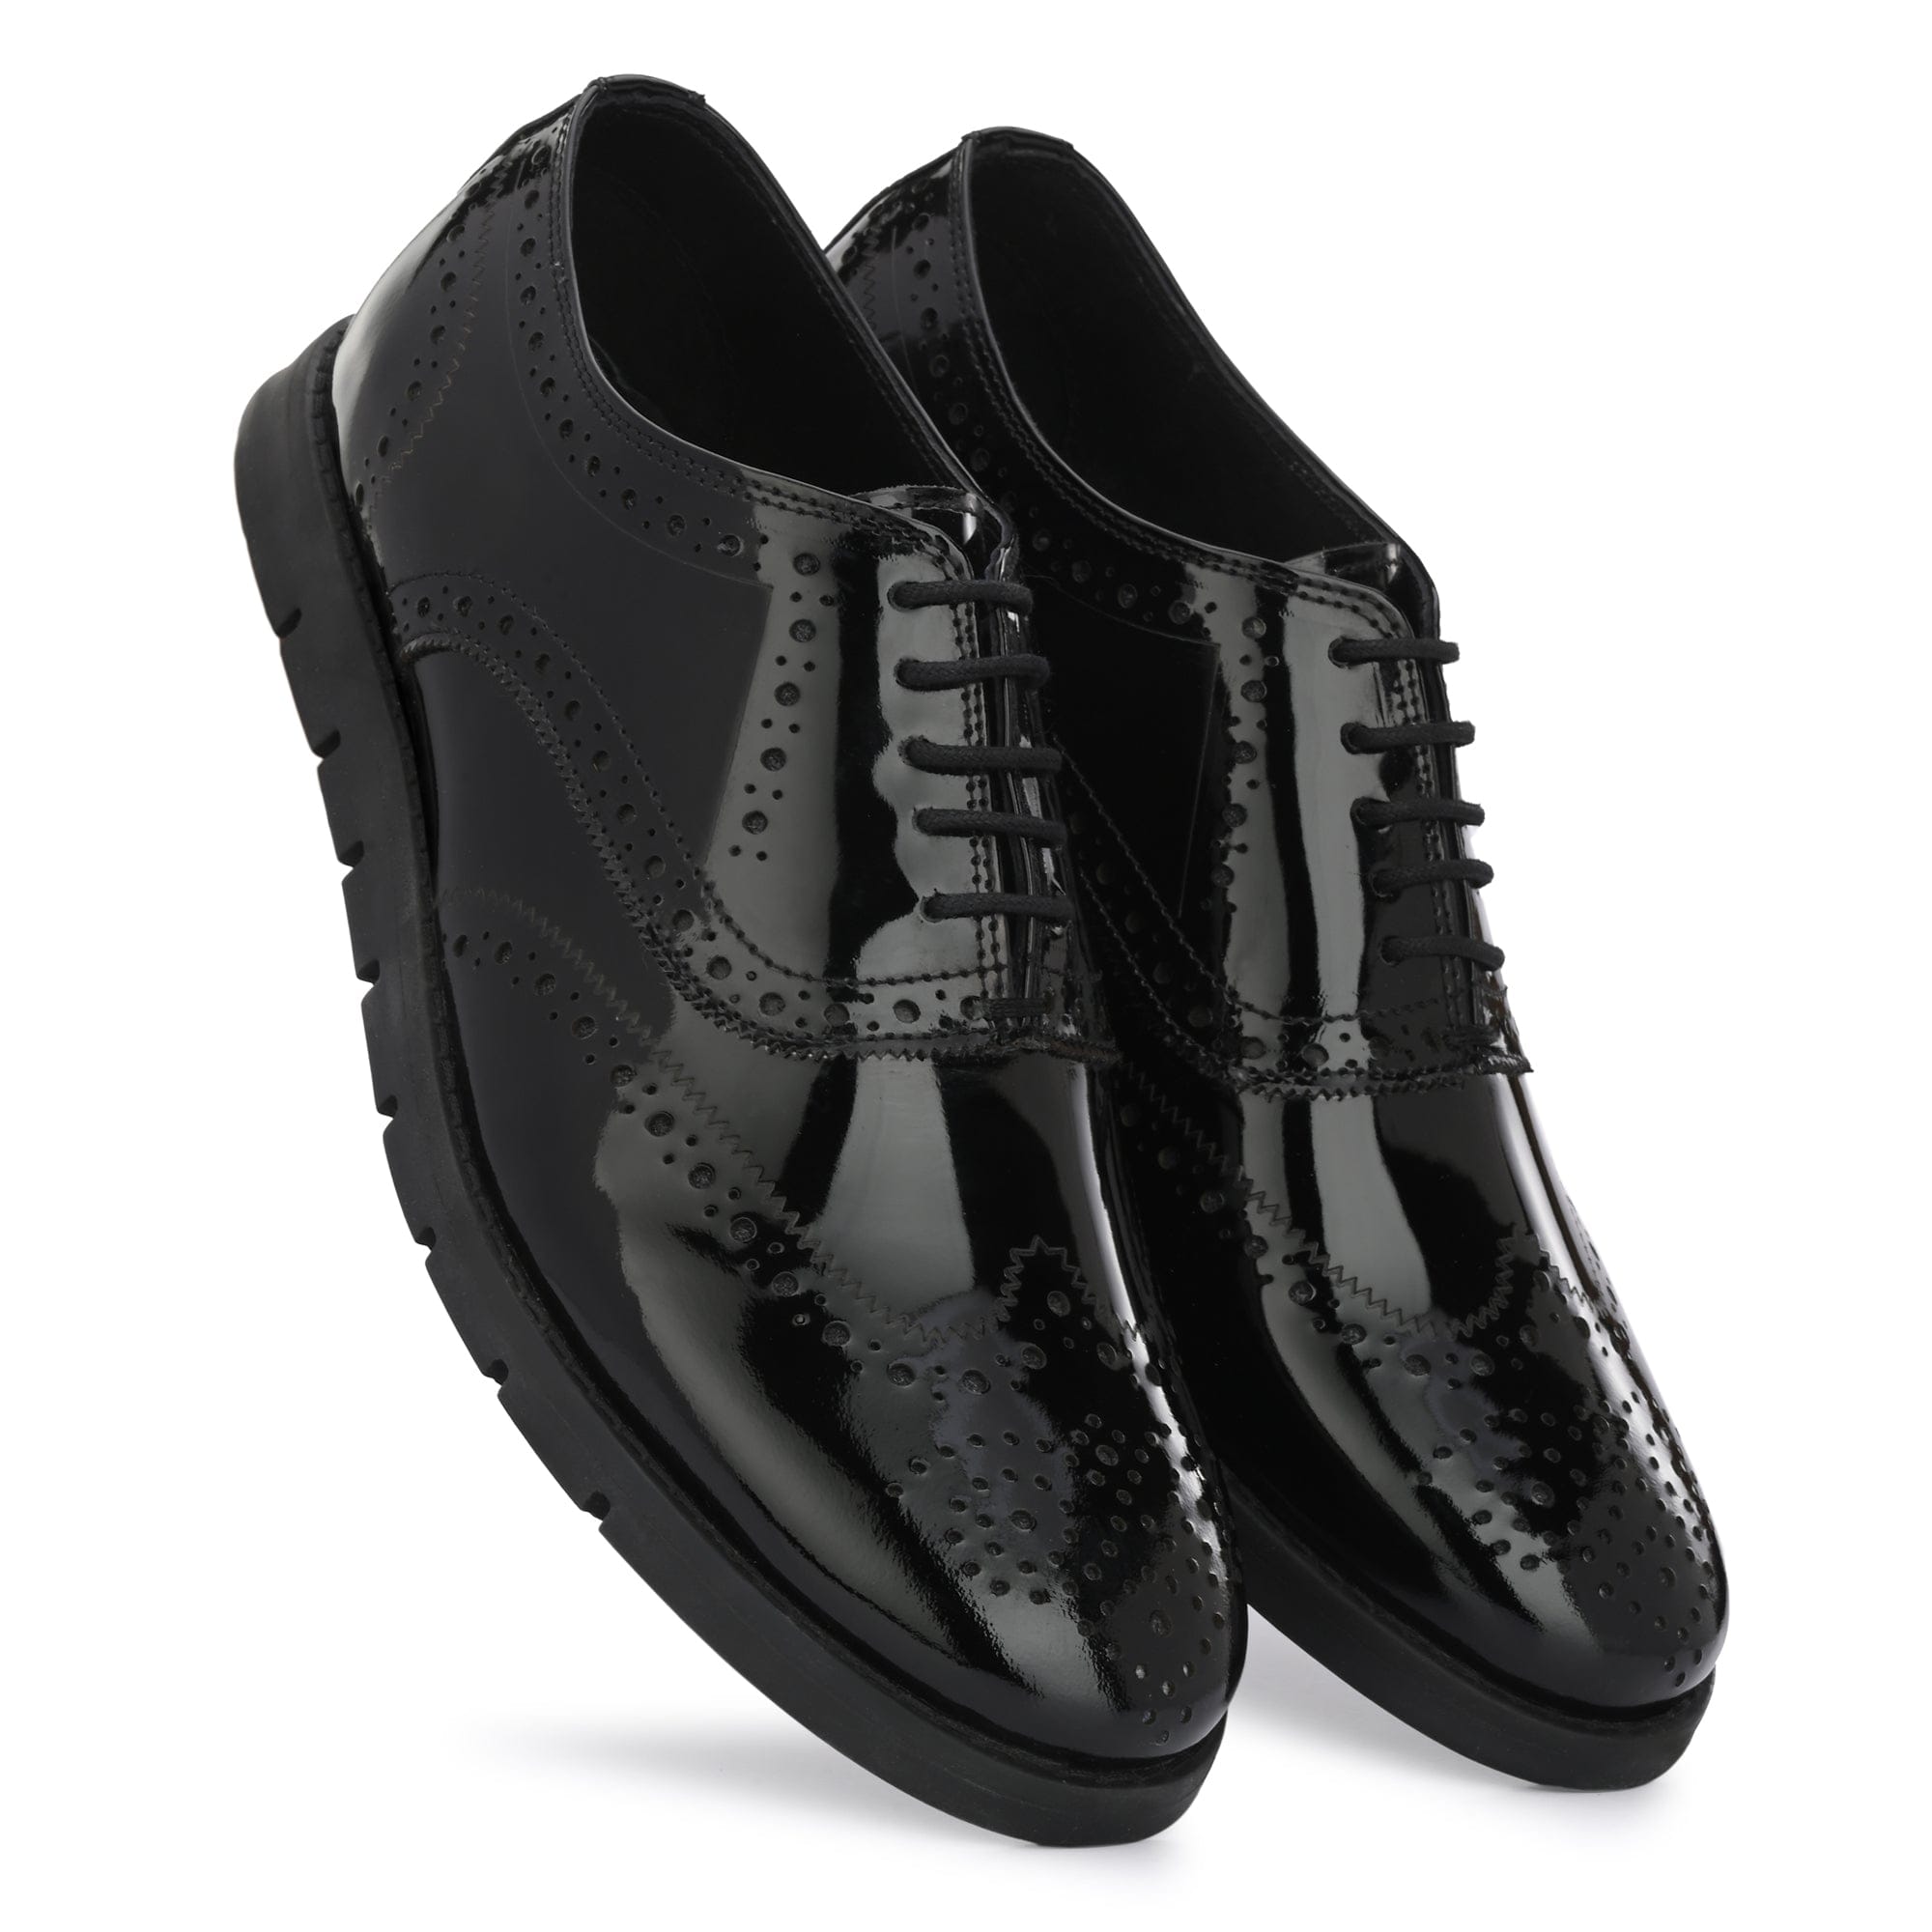 Legwork Brogue Informal Oxford Wingtip Black Patent Italian Leather Shoe